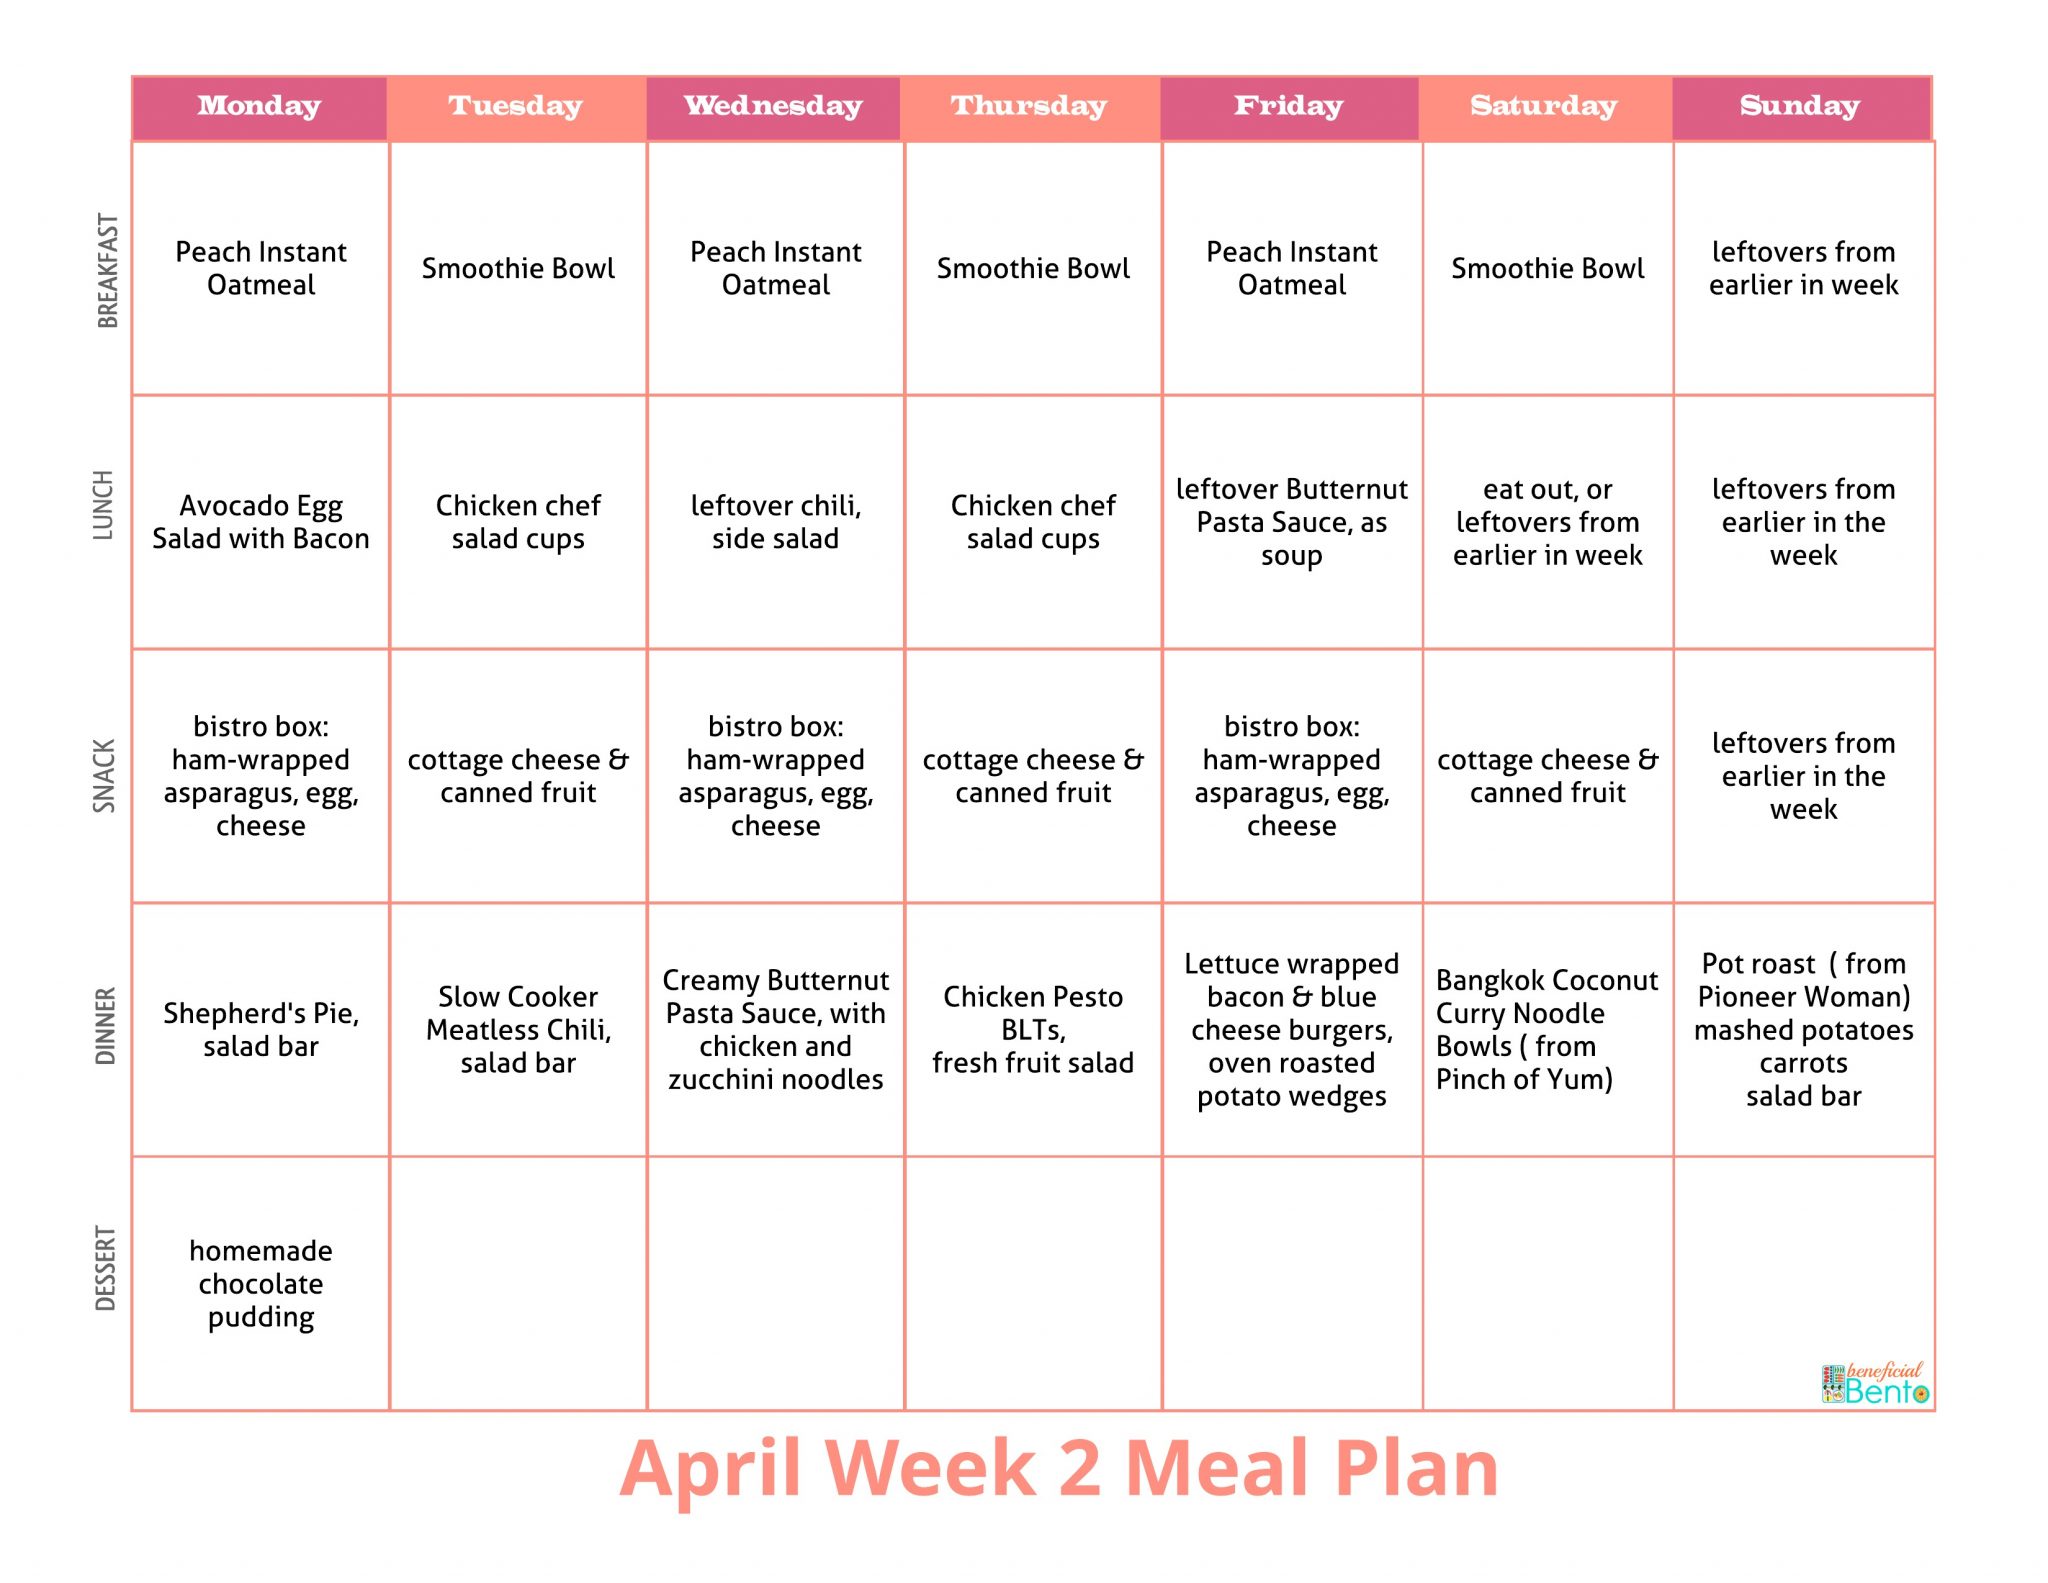 https://static.beneficial-bento.com/uploads/2017/04/April-Week-2-Meal-Plan.jpeg